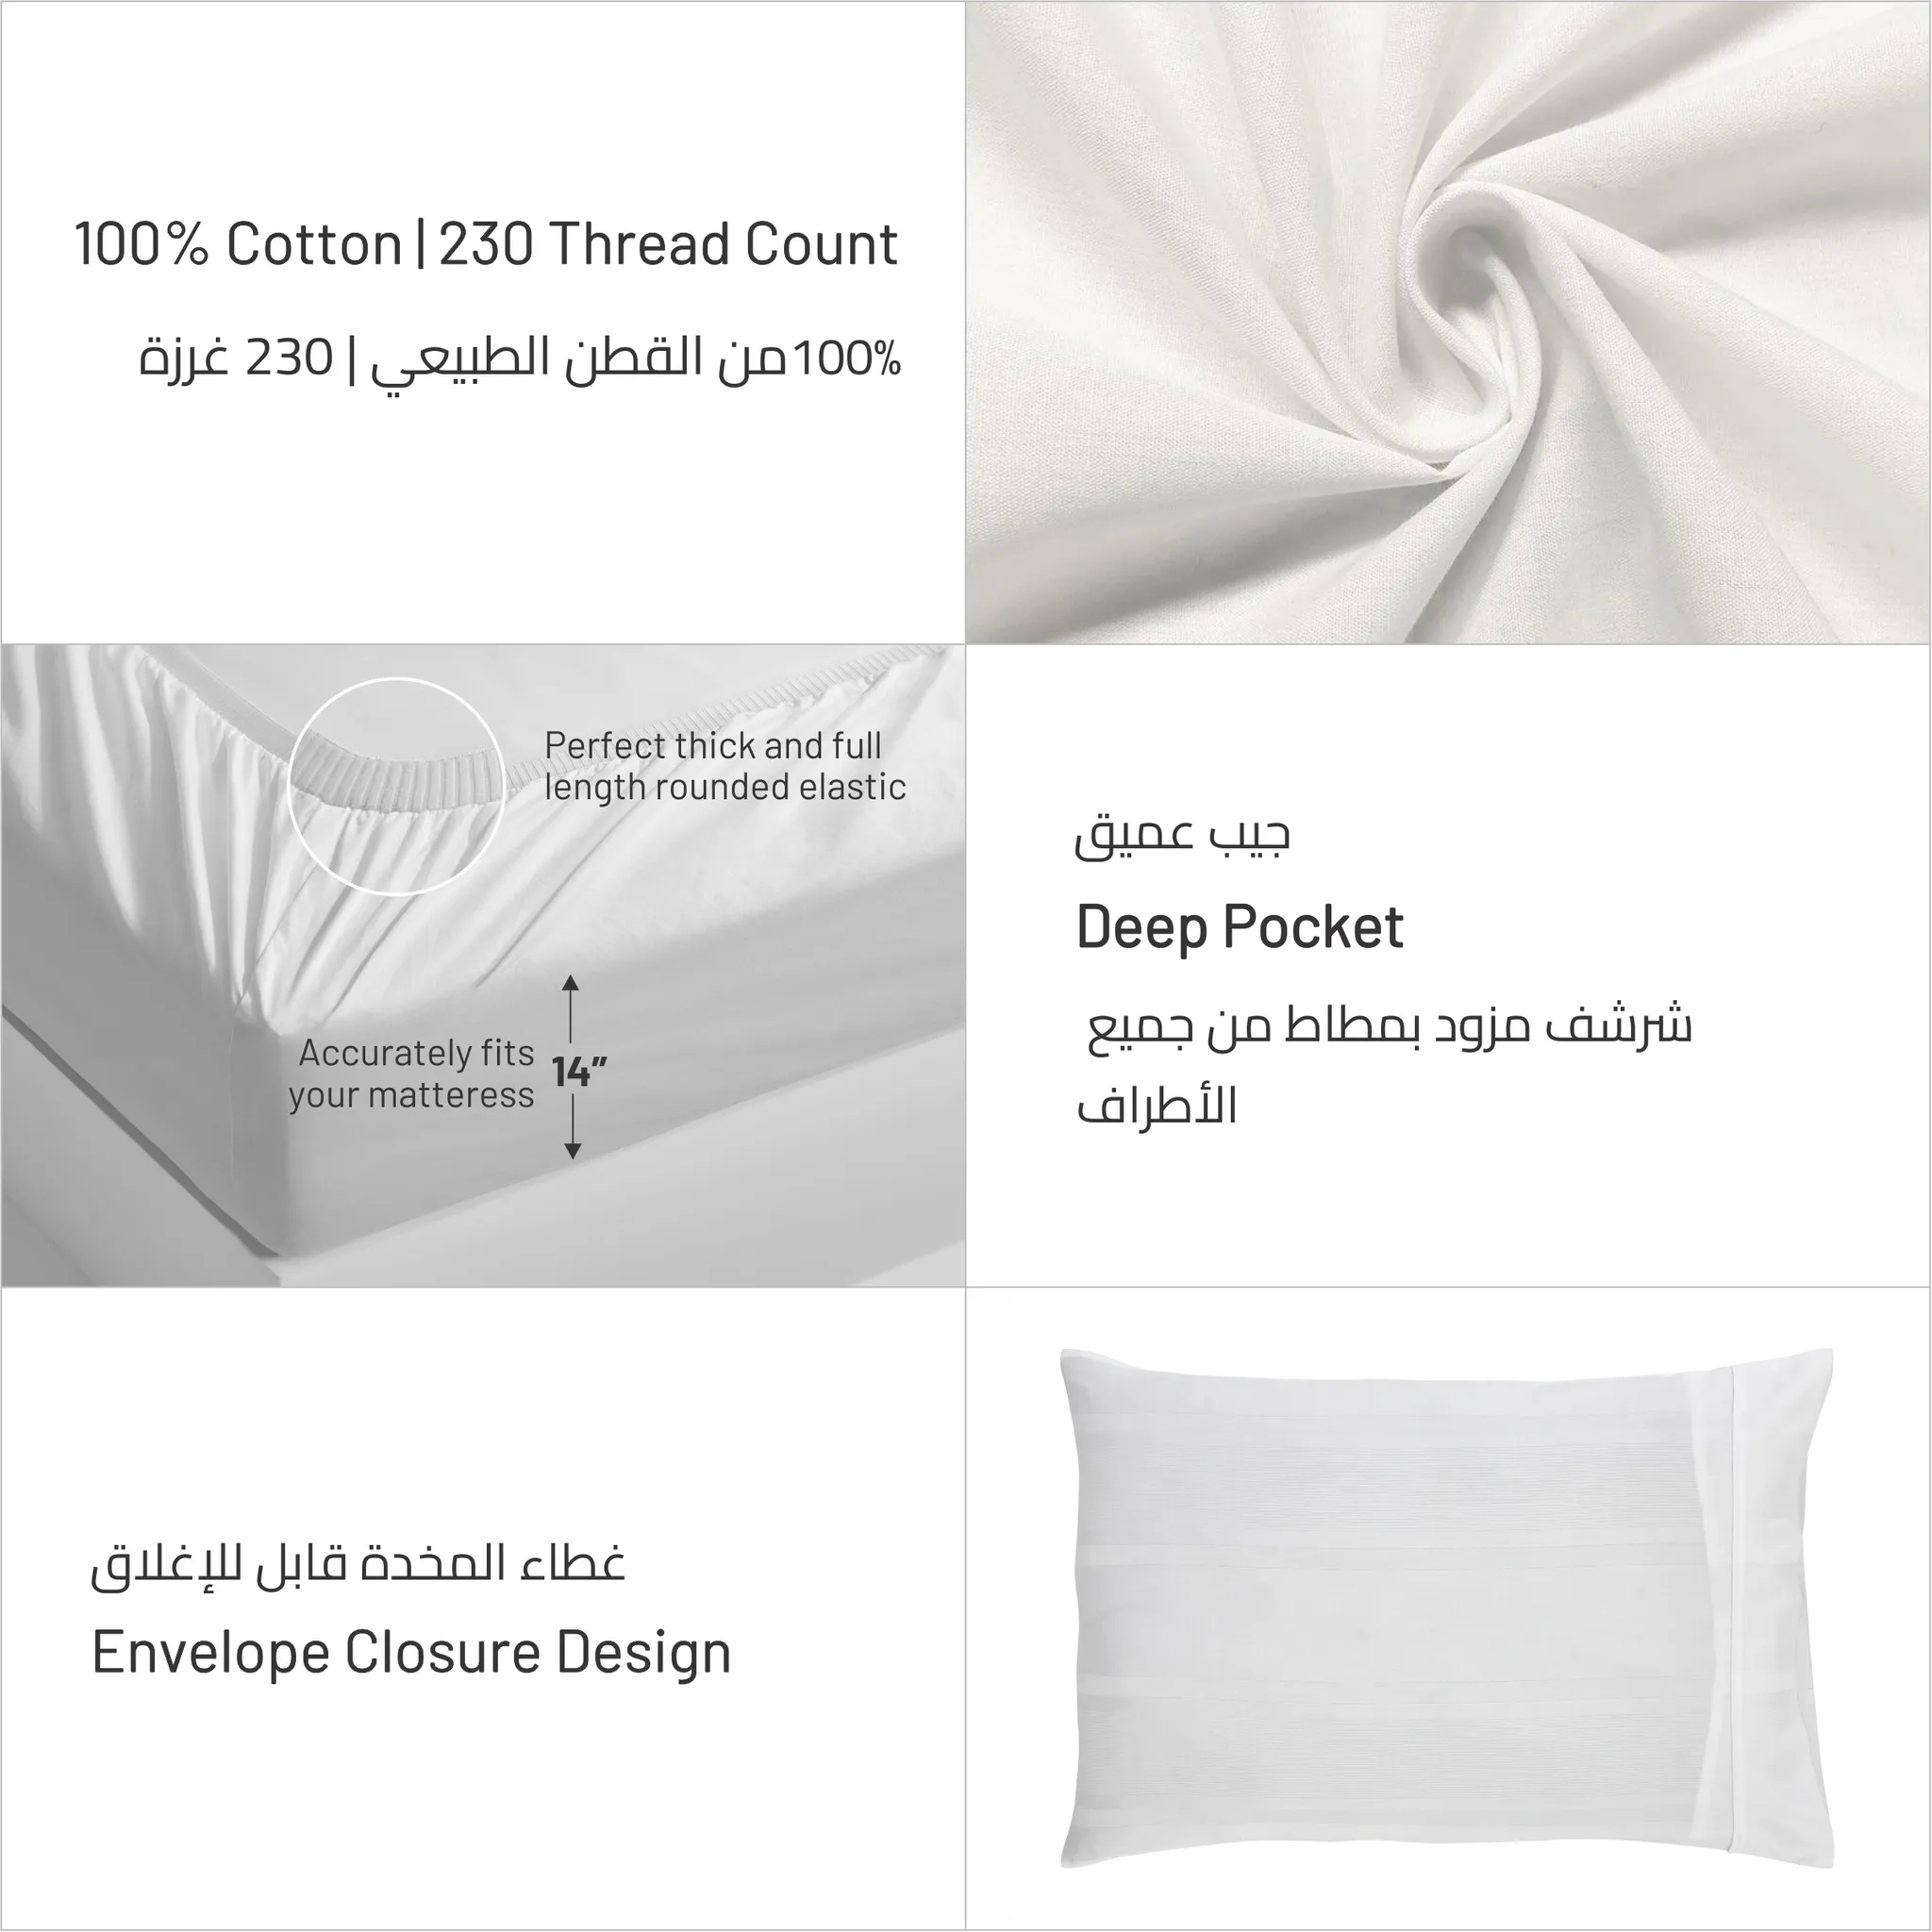 6-Piece King Size Cotton Comforter Set Reversible Pattern, Ivory/ Multicolour